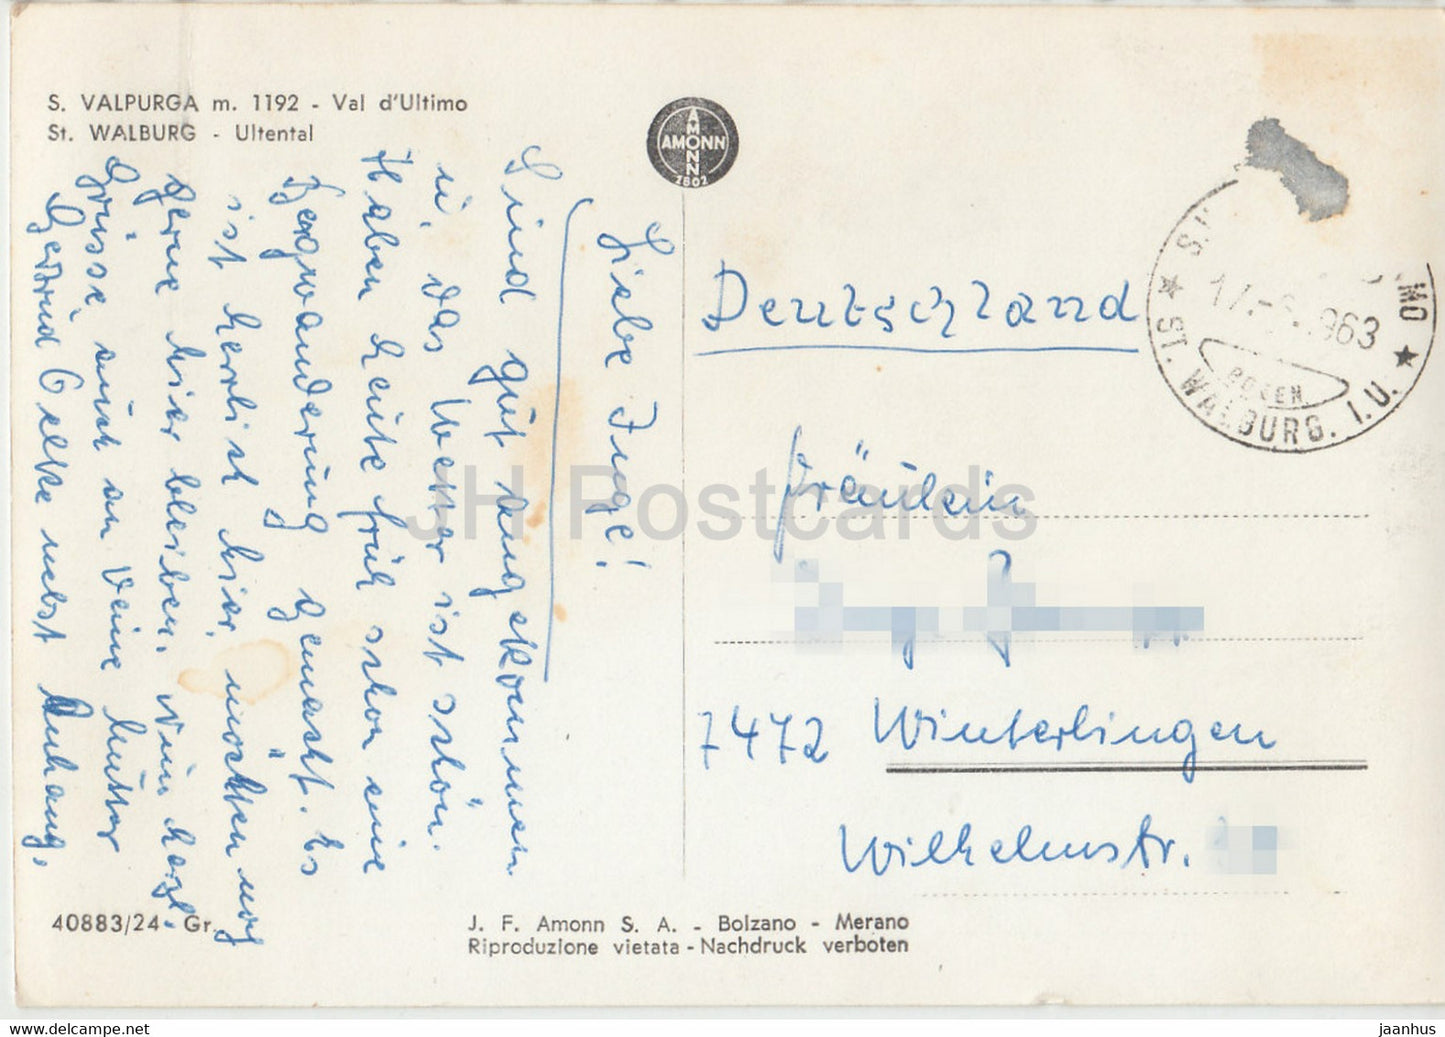 S Valpurga 1192 m - Ultental - St. Walburg - Ultental - 1963 - Italien - gebraucht